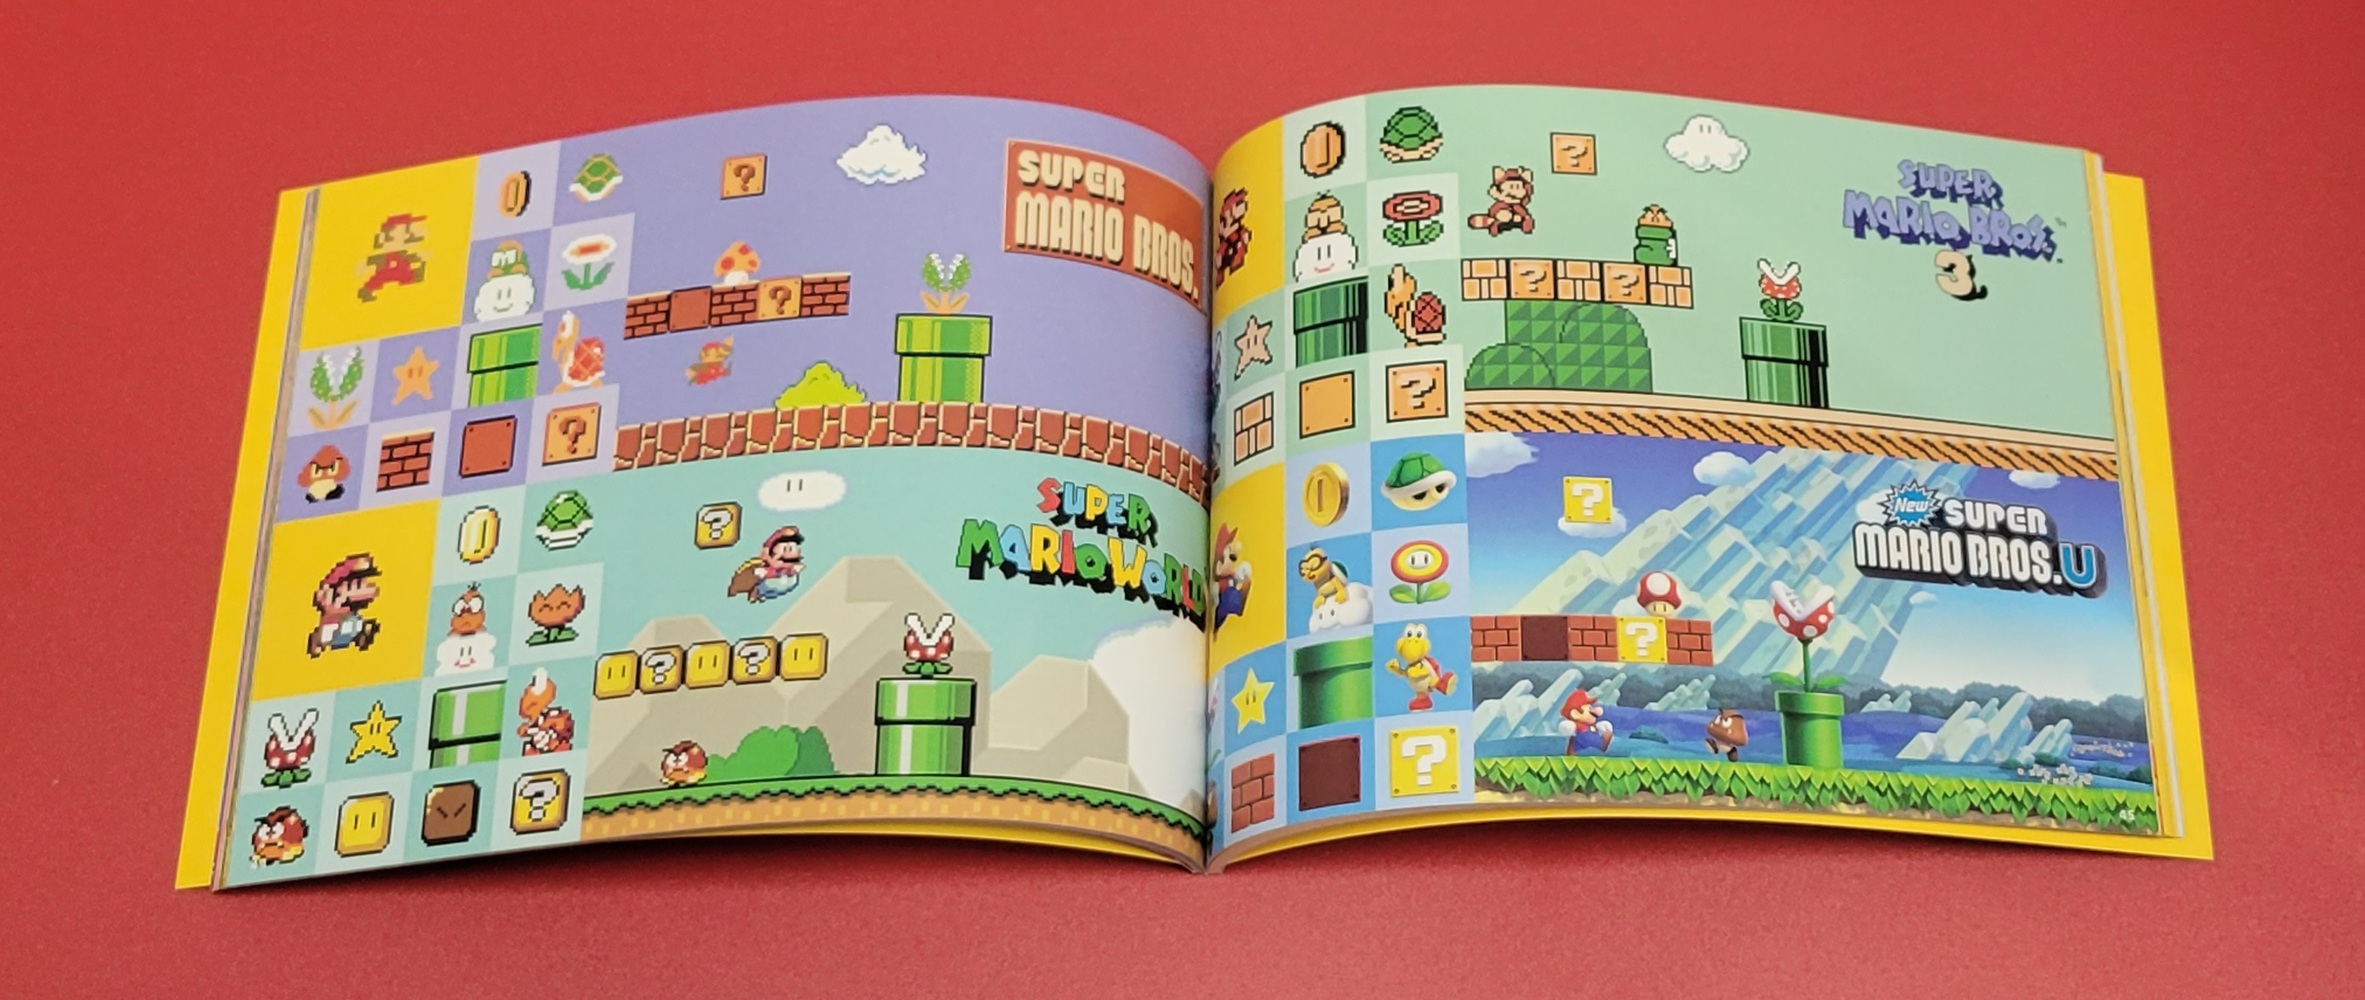 Nintendo Wii U Super Mario Maker Video Game - Complete